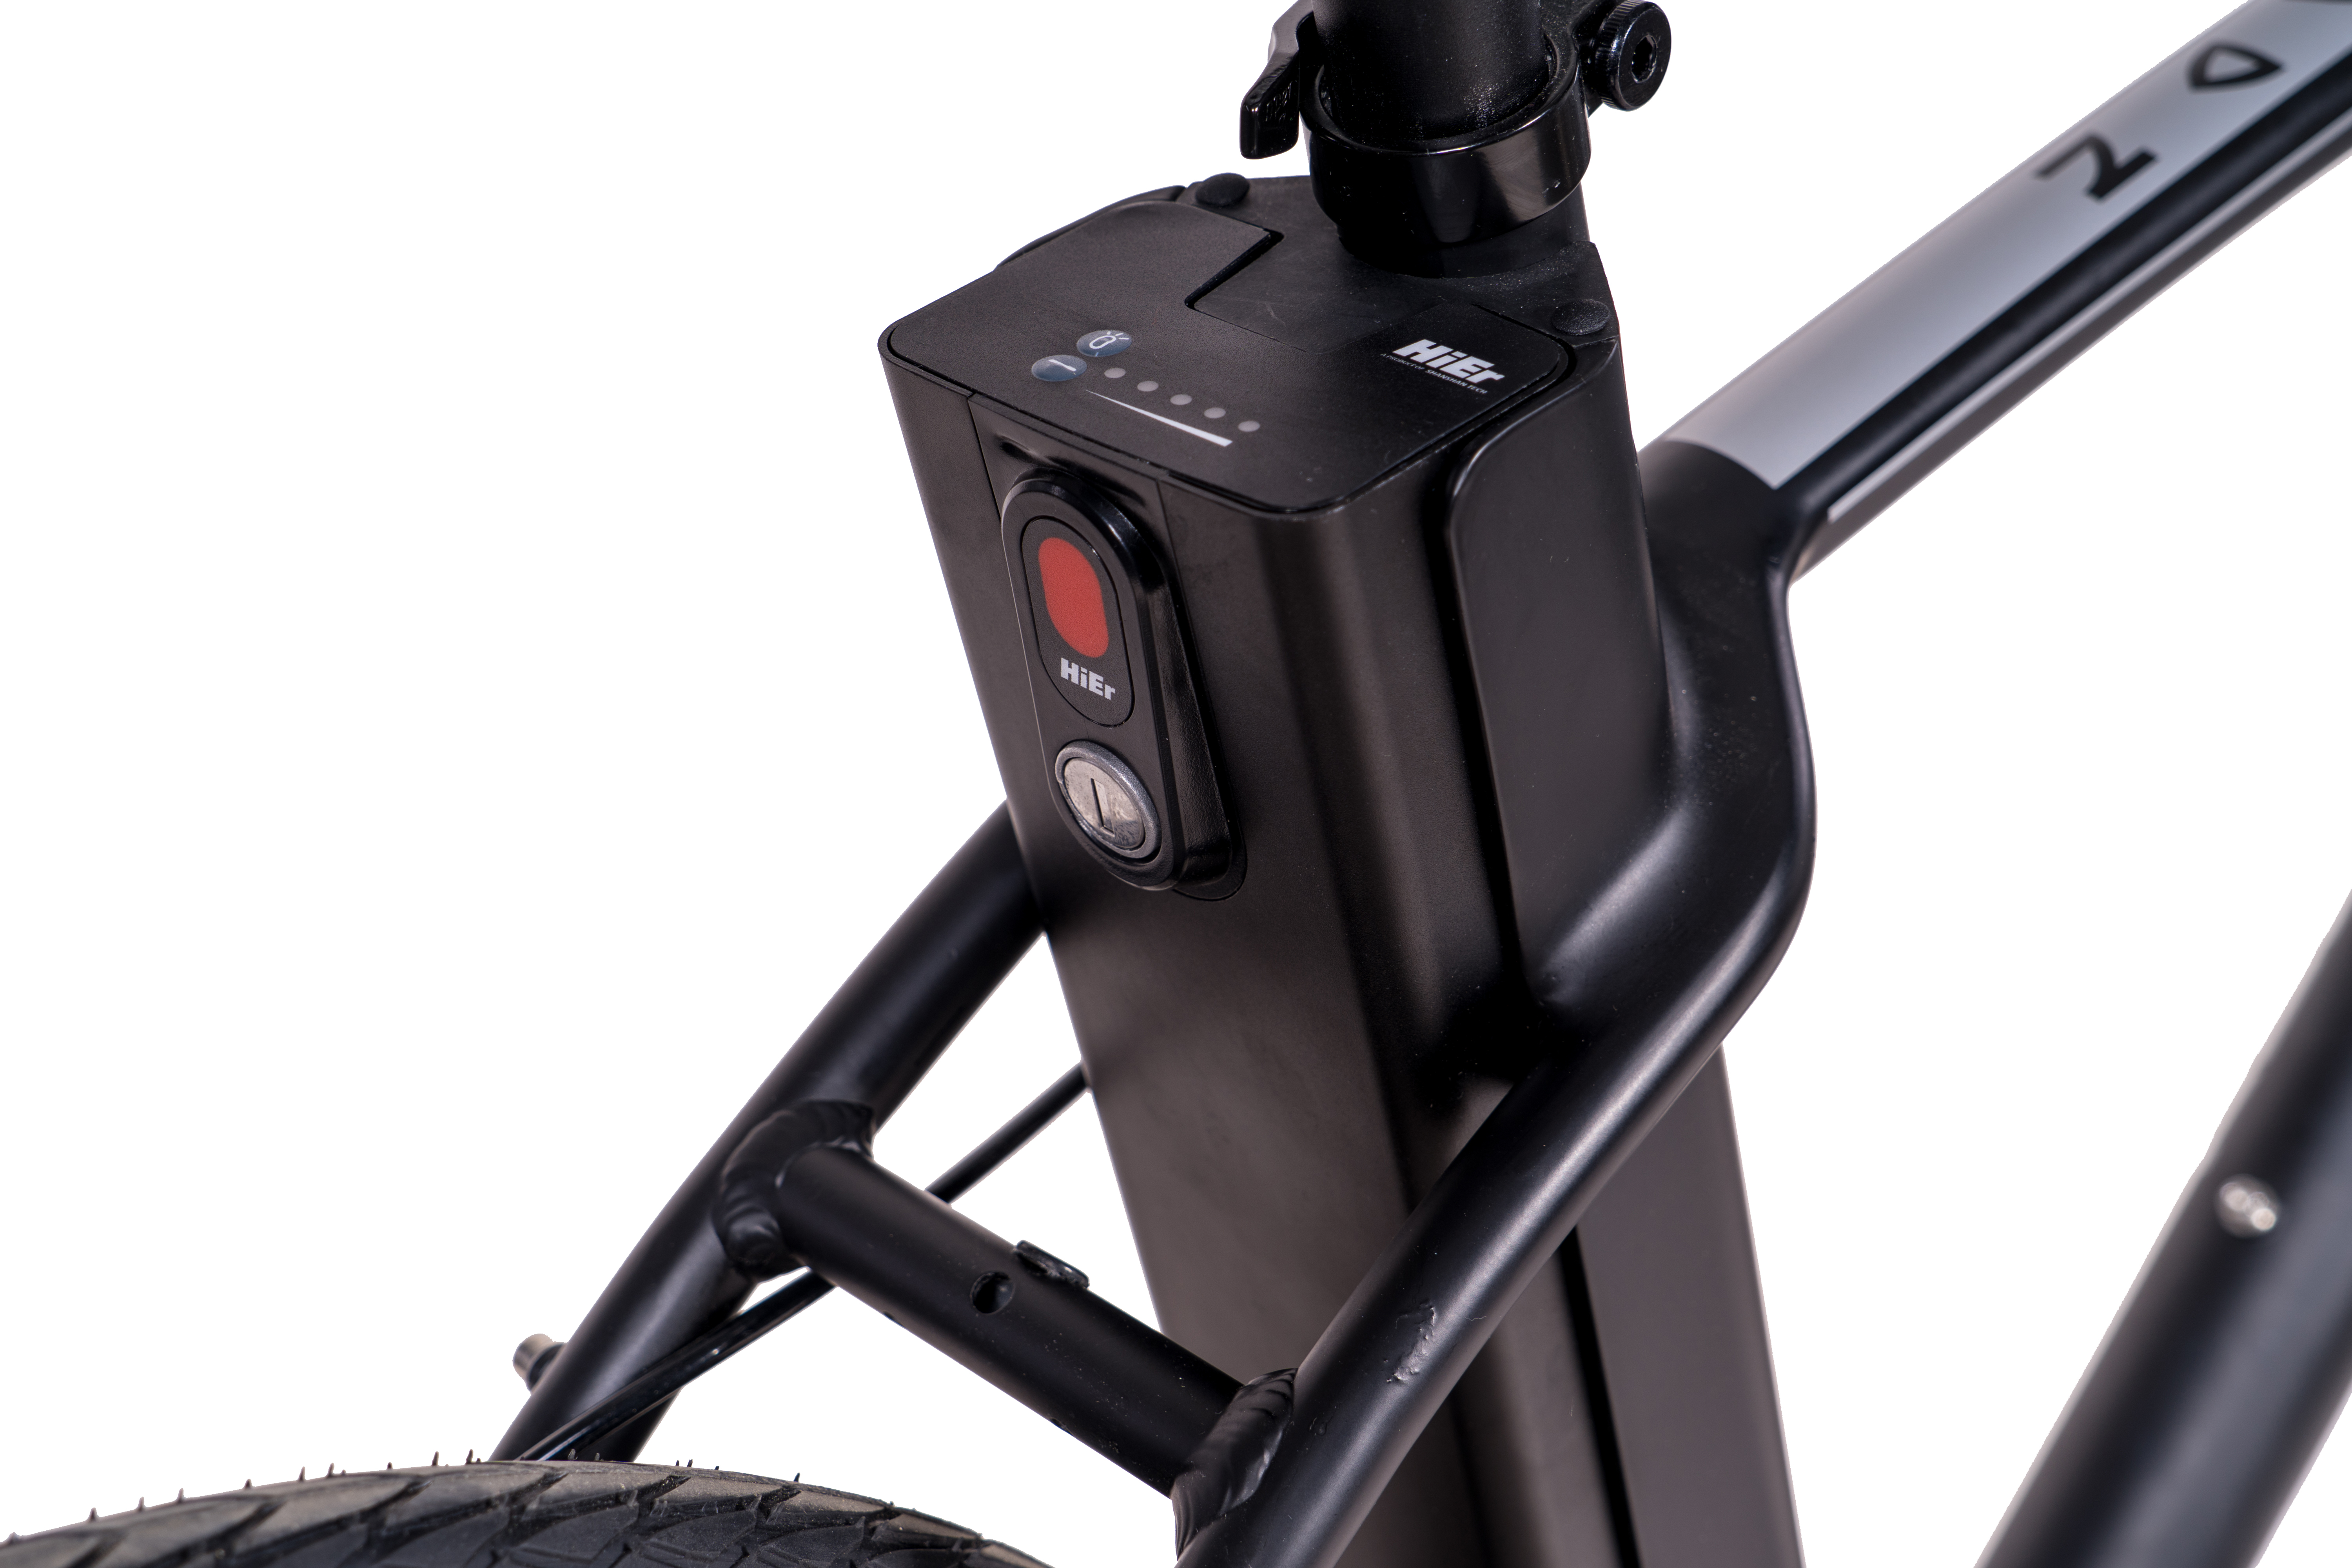 CHRISSON eOctant Kettenantrieb Rahmenhöhe: 28 cm, 52 Wh, 367 Zoll, schwarz) Urbanbike (Laufradgröße: Unisex-Rad